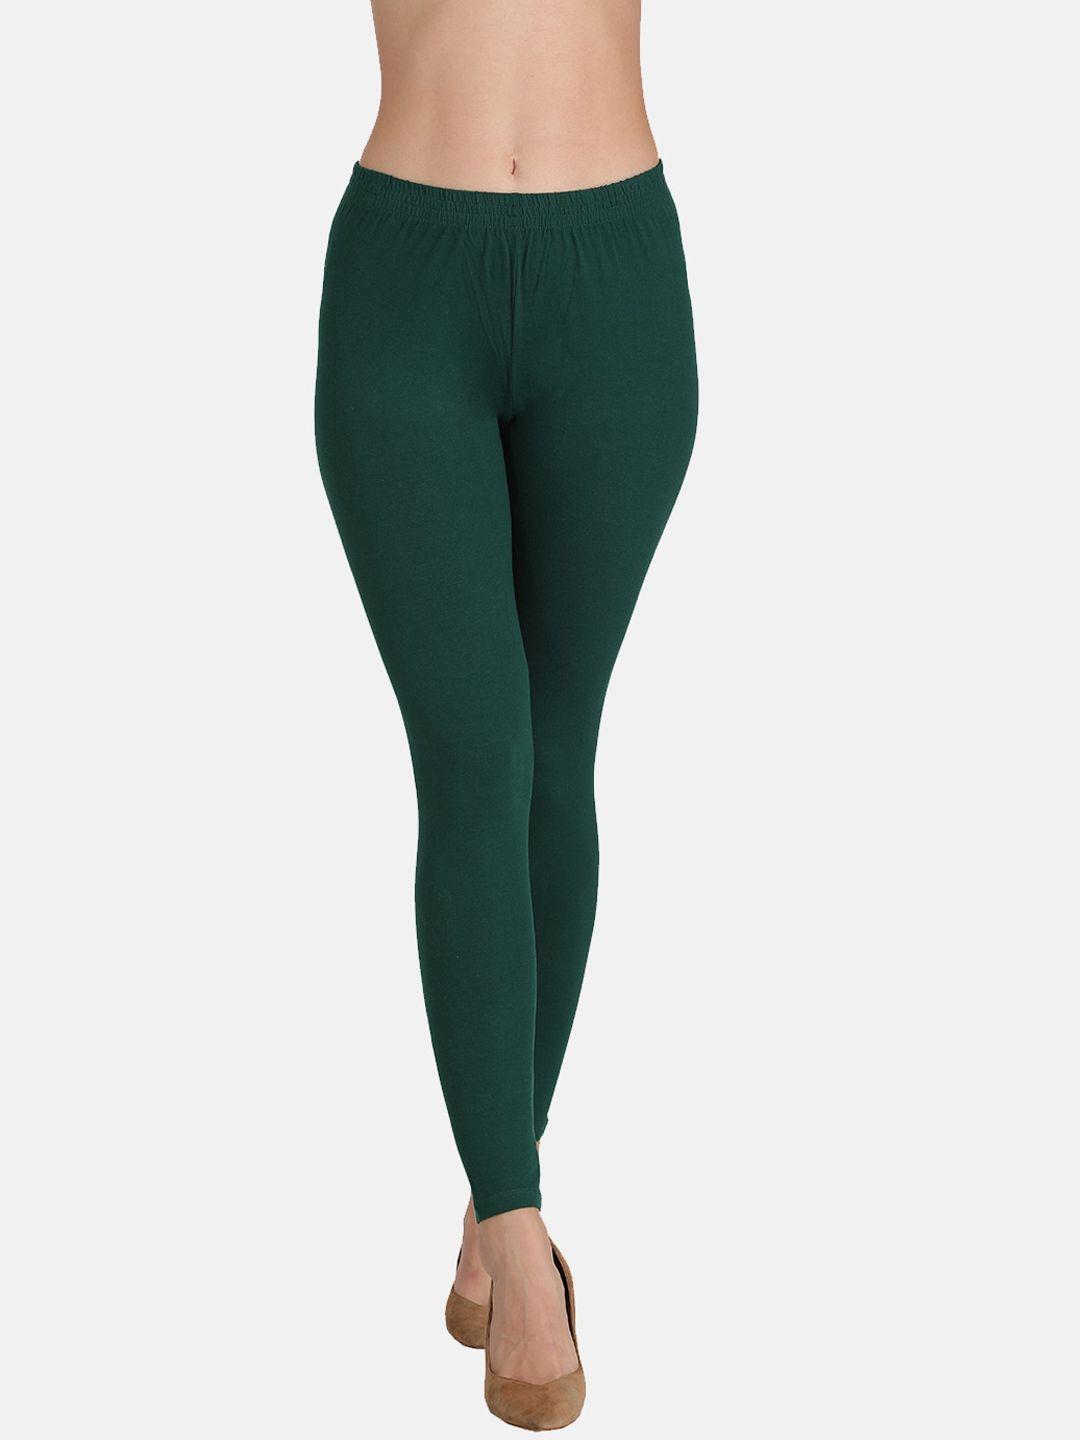 groversons paris beauty women green solid ankle-length leggings